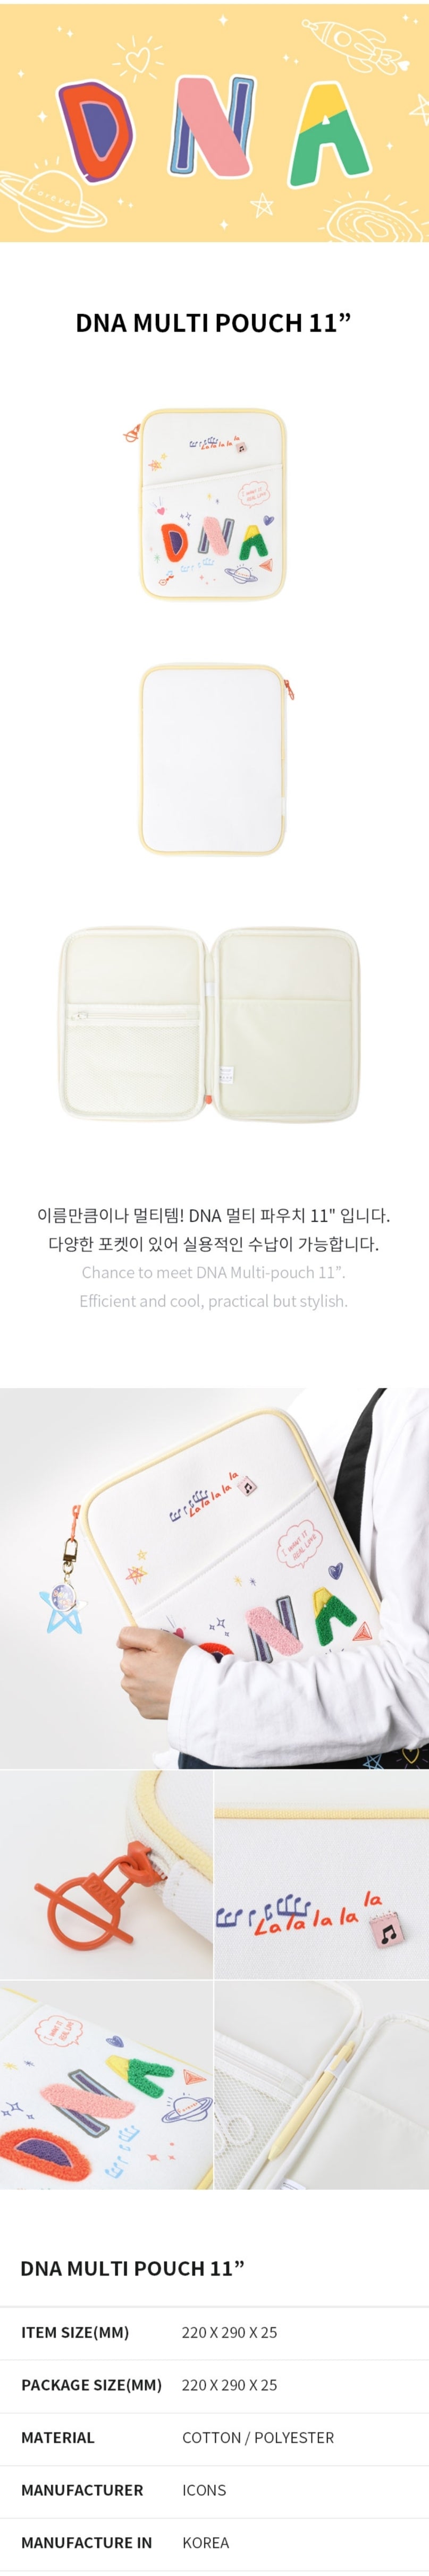 DNA Multi Pouch 11"